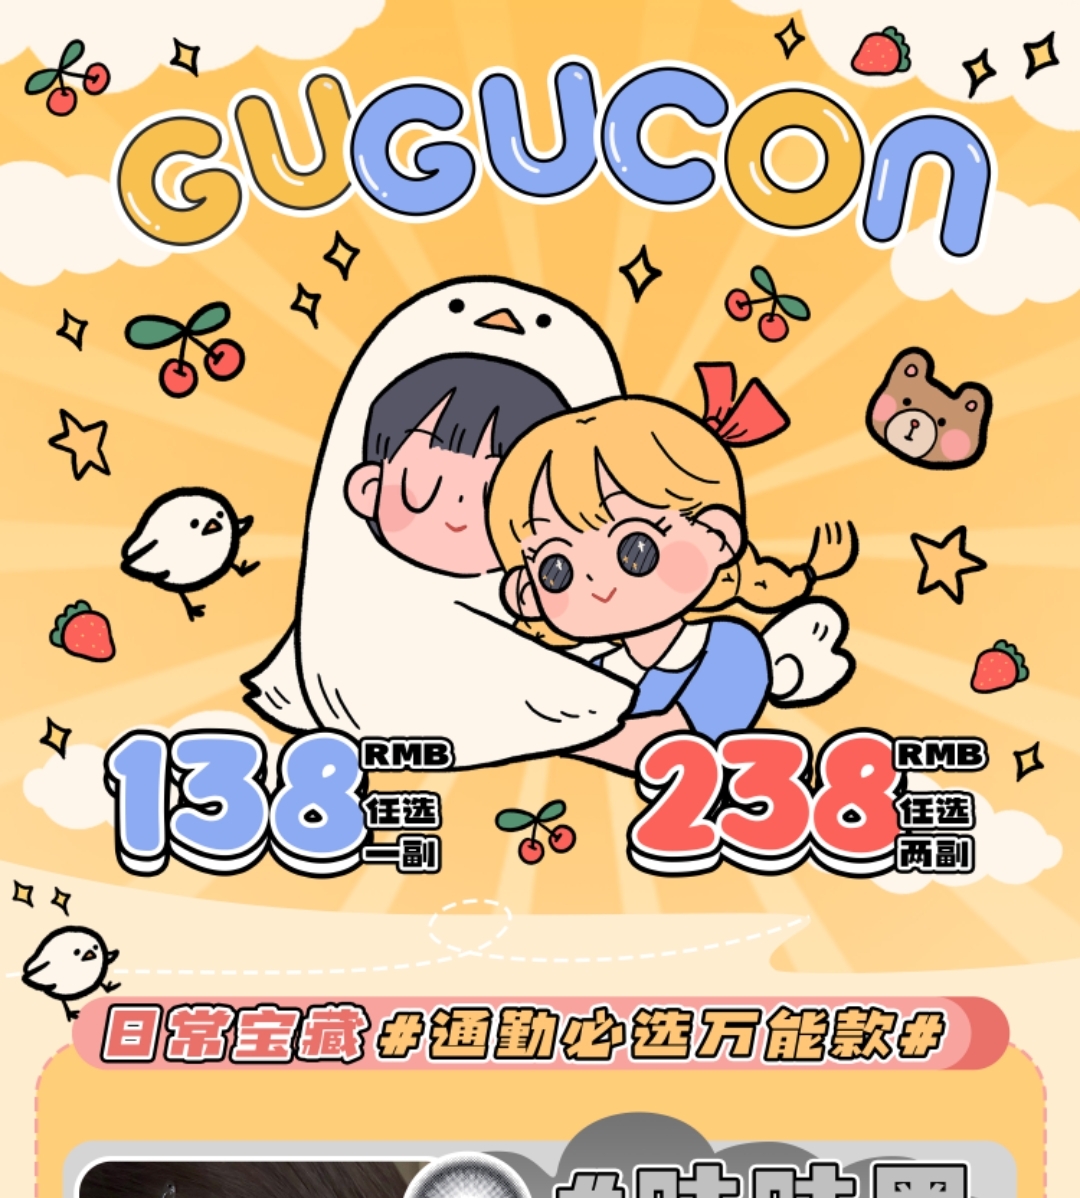 【半年抛】GUGUCON 正价活动